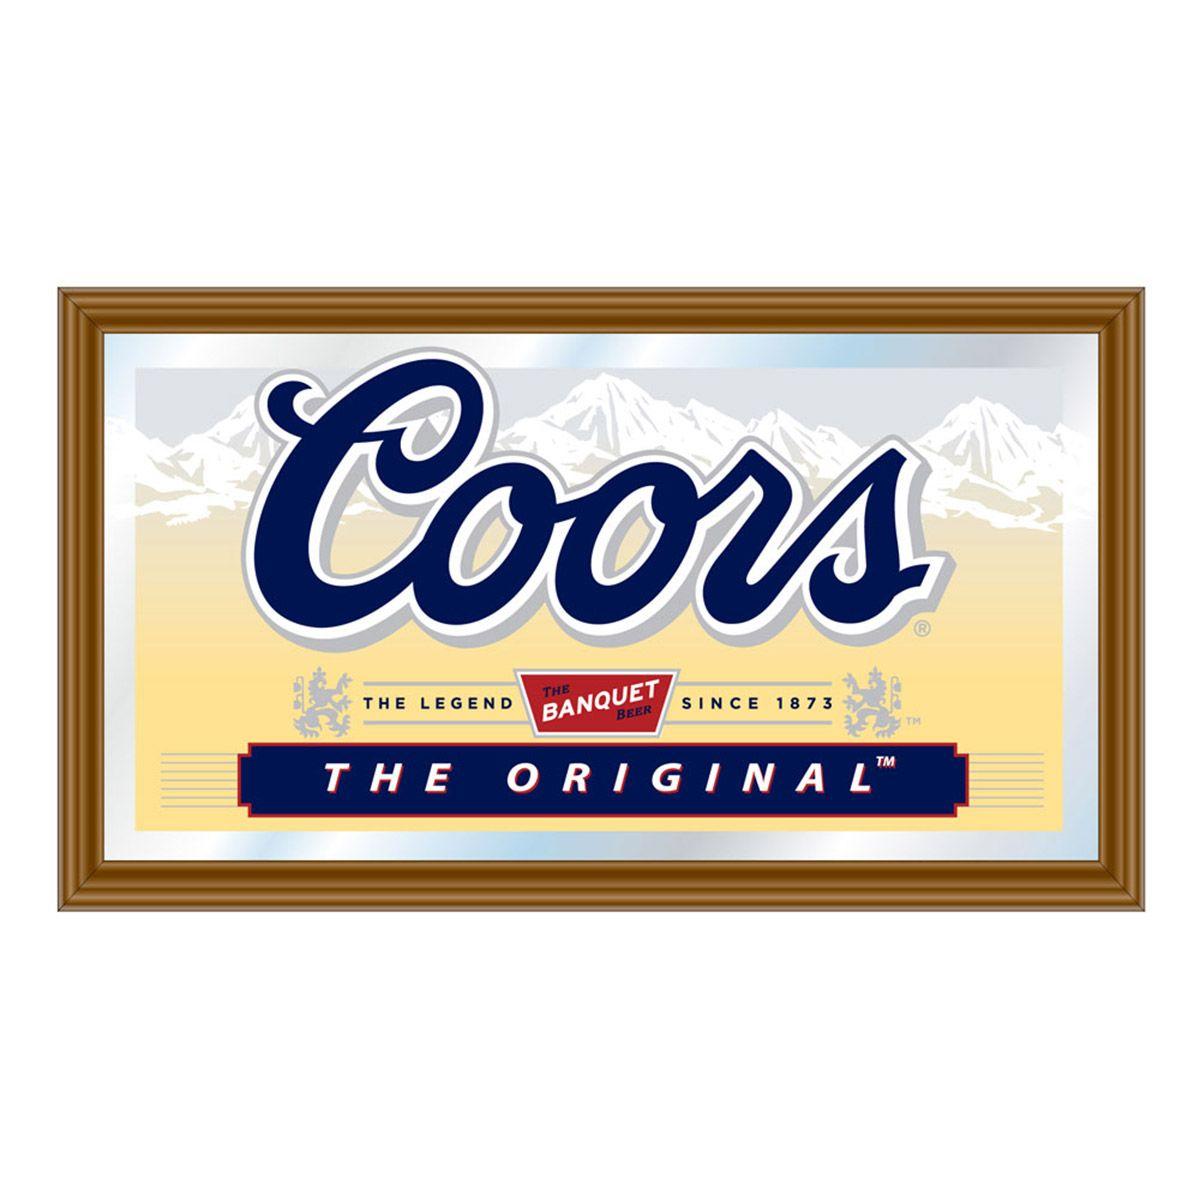 Coors Banquet Beer Logo - Coors Banquet Beer Original Decorative Mirror at Retro Planet